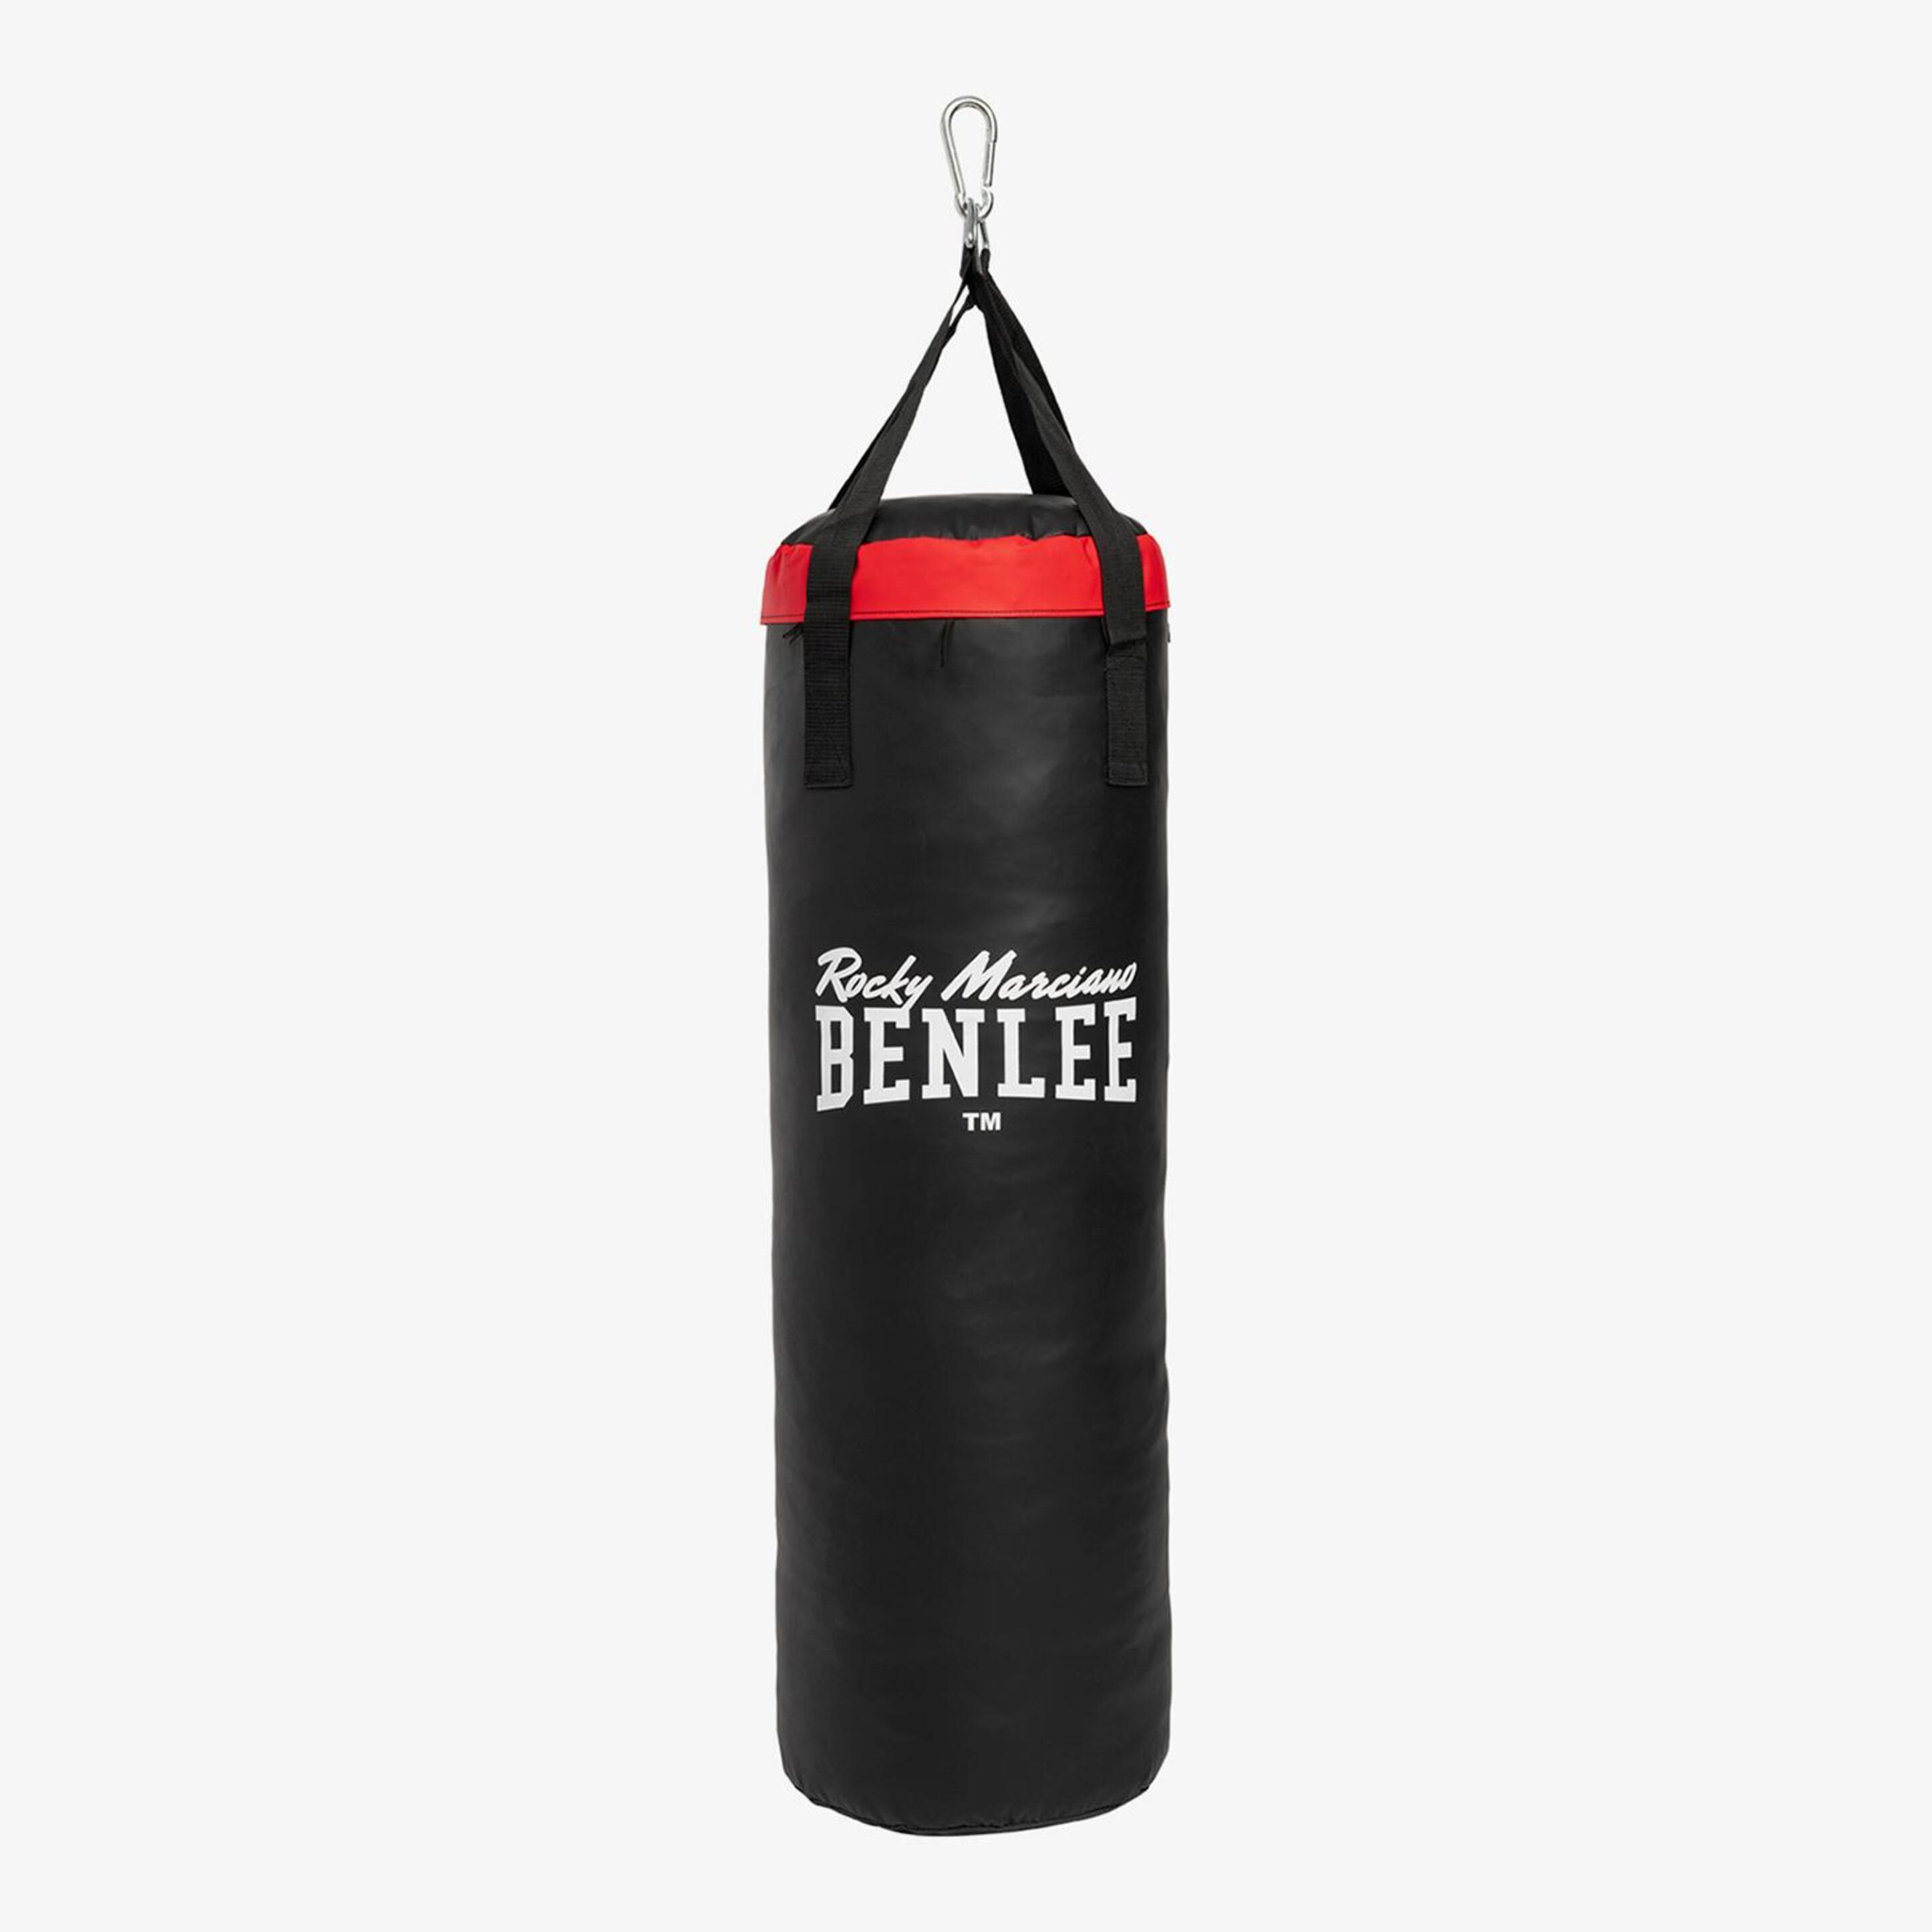 Saco Boxeo 29kg Benlee